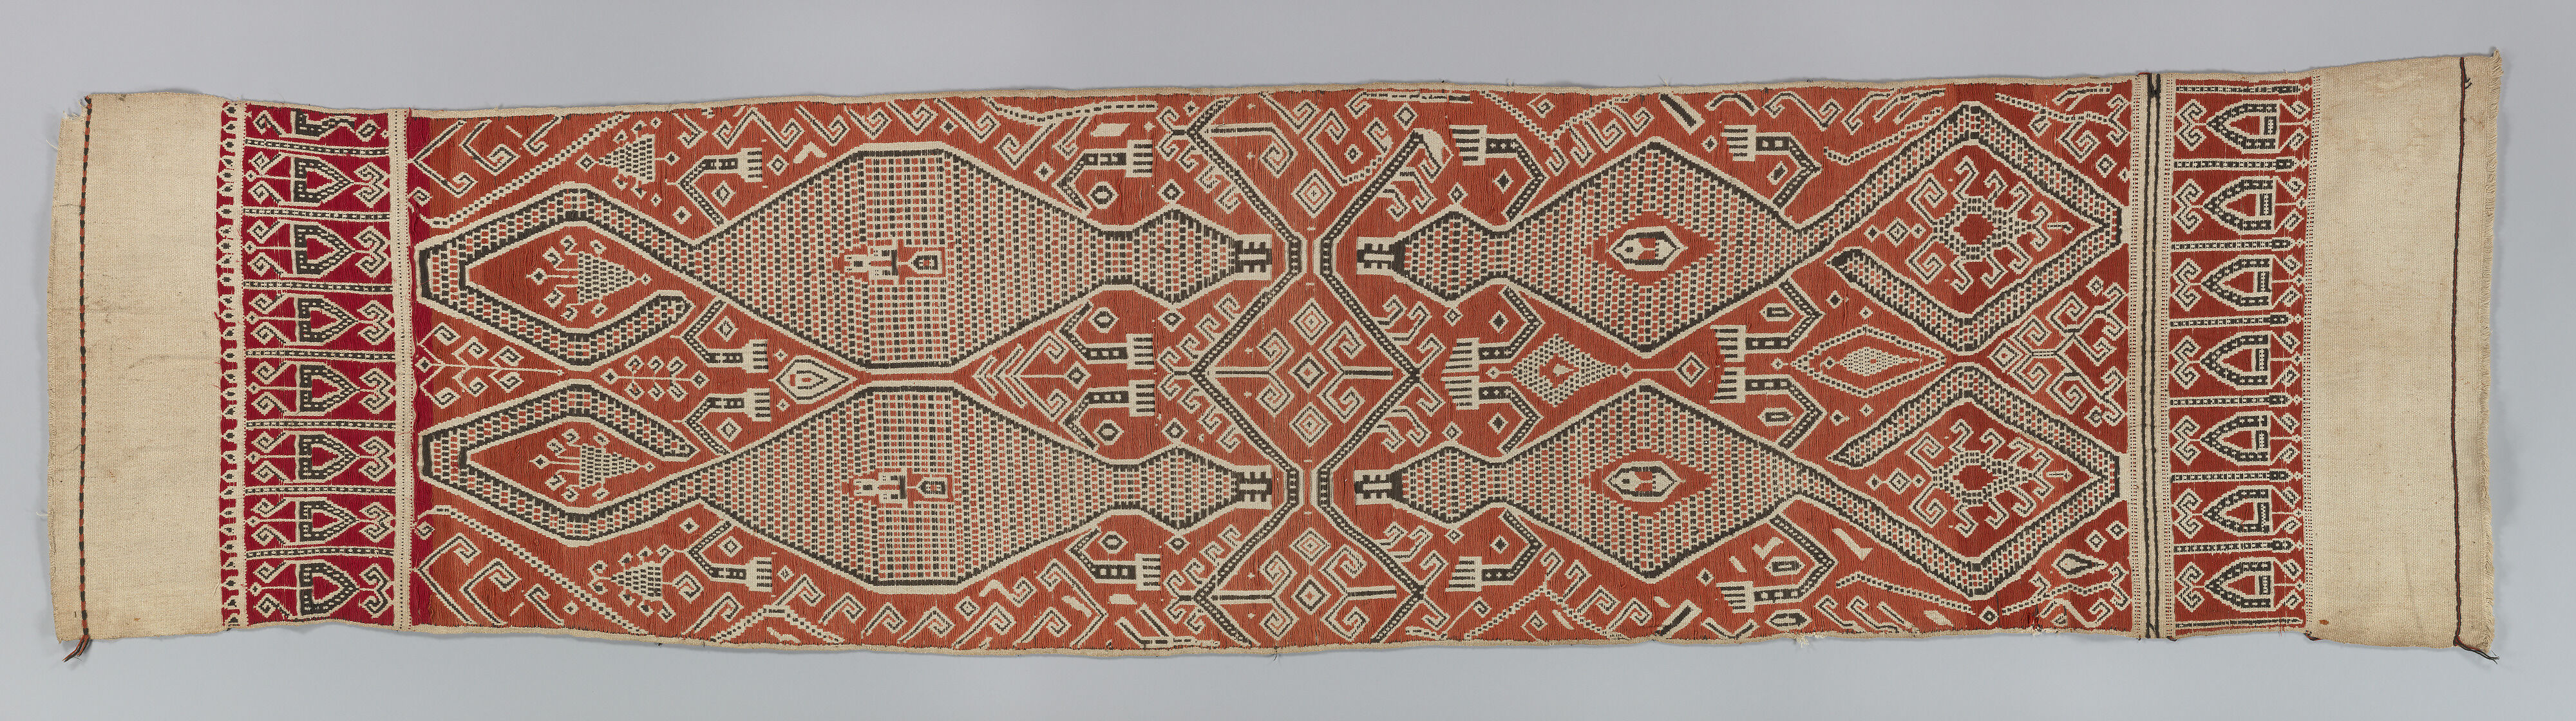 Ceremonial cloth, Cotton ikat dyed textile, Iban-Dayak 